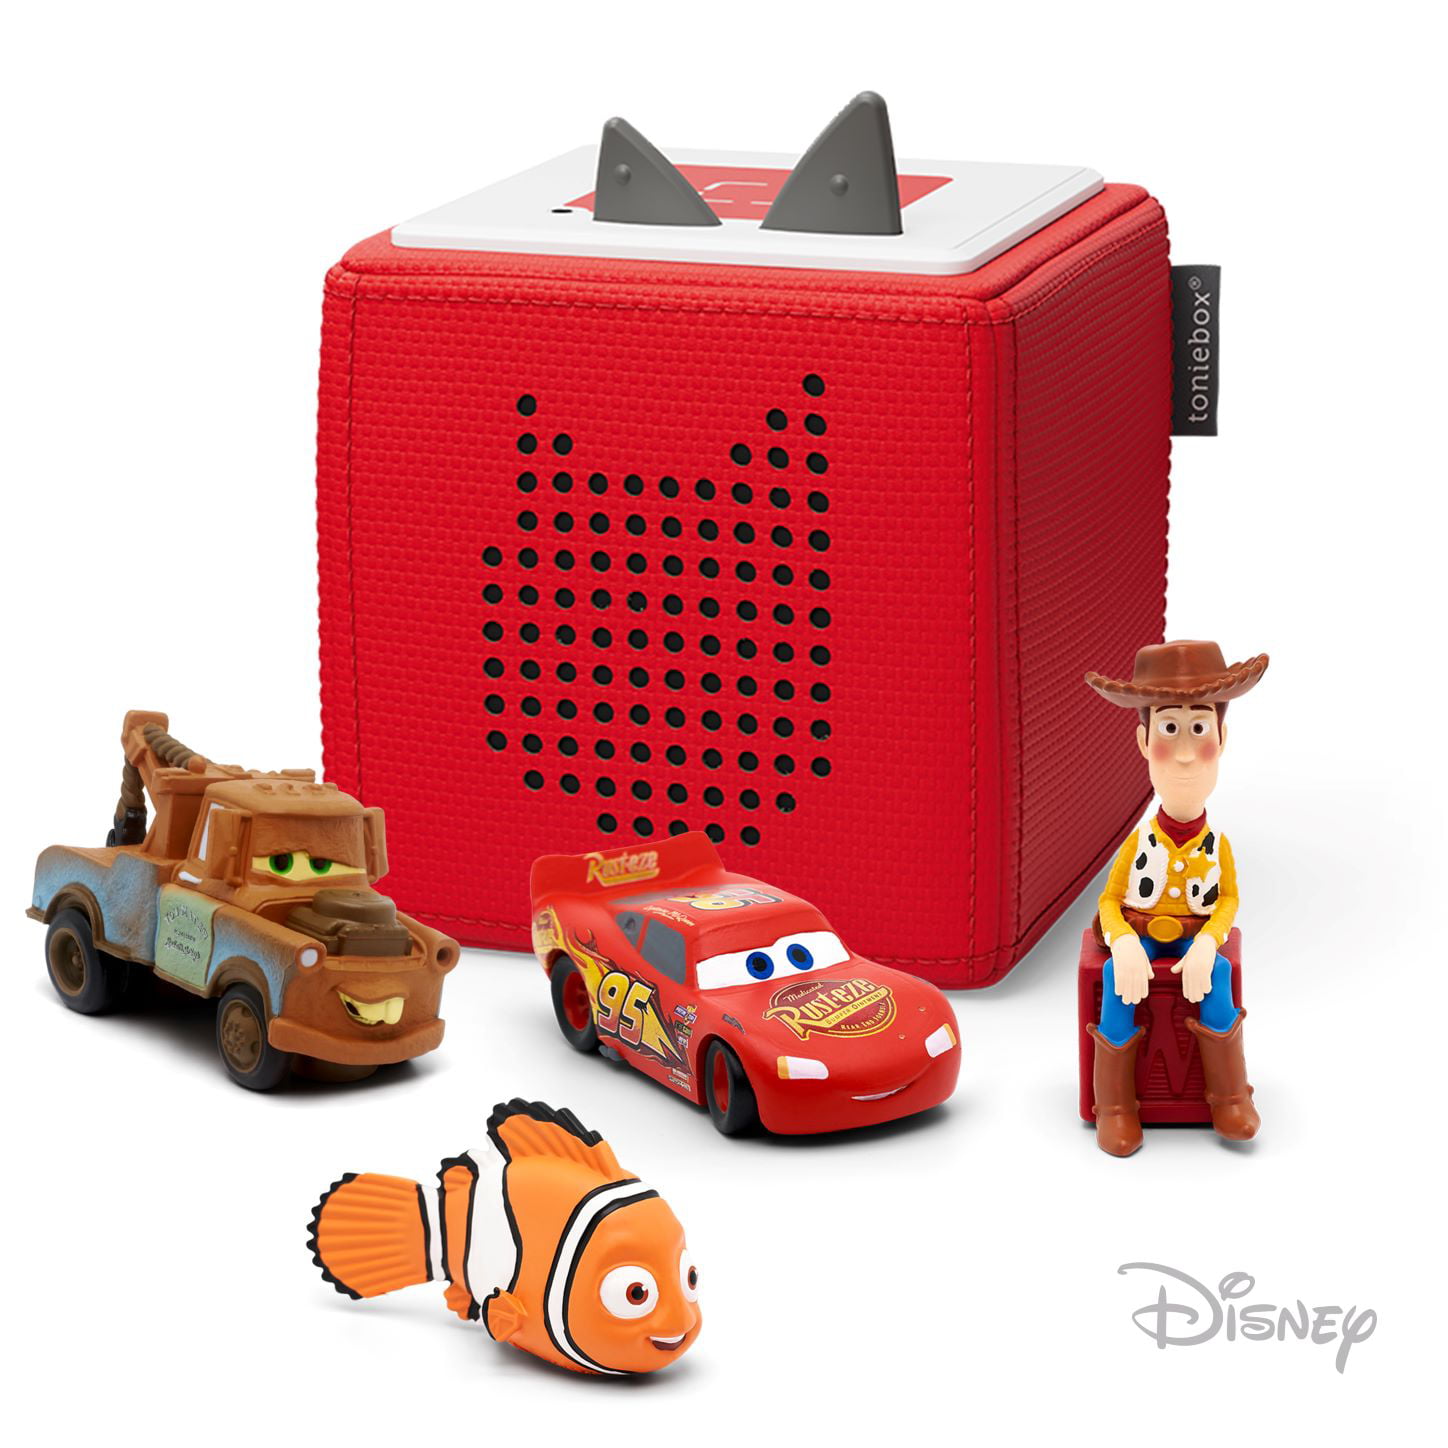 Toniebox Bundle with Woody, Lightning McQueen, Nemo, and Mater from Disney-Pixar